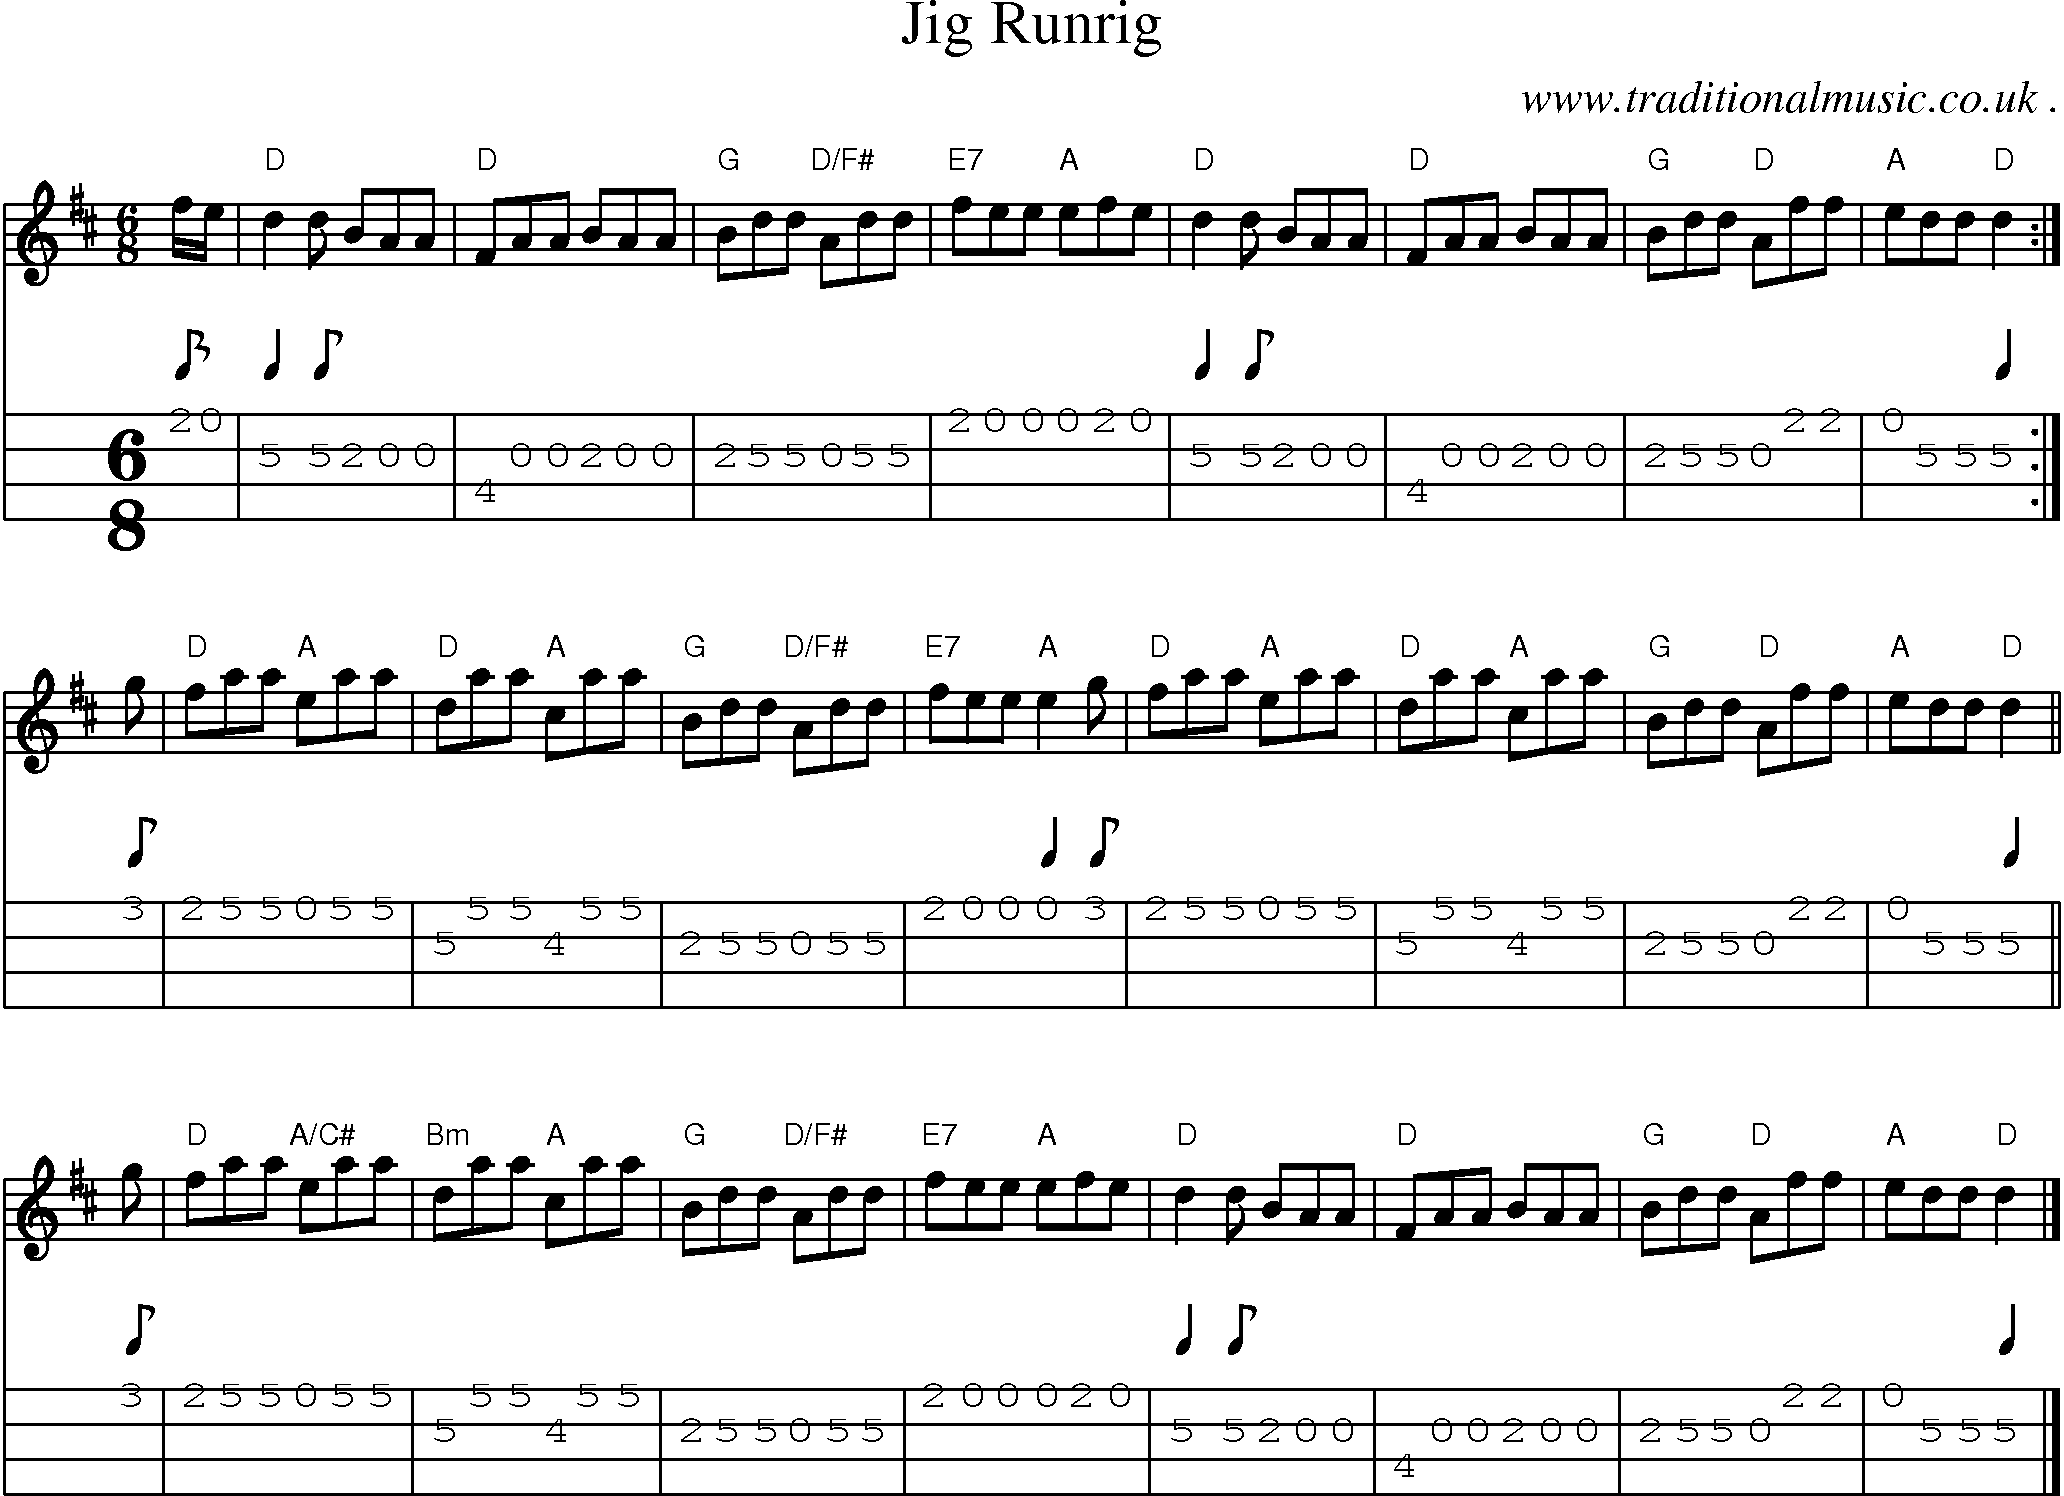 Sheet-music  score, Chords and Mandolin Tabs for Jig Runrig